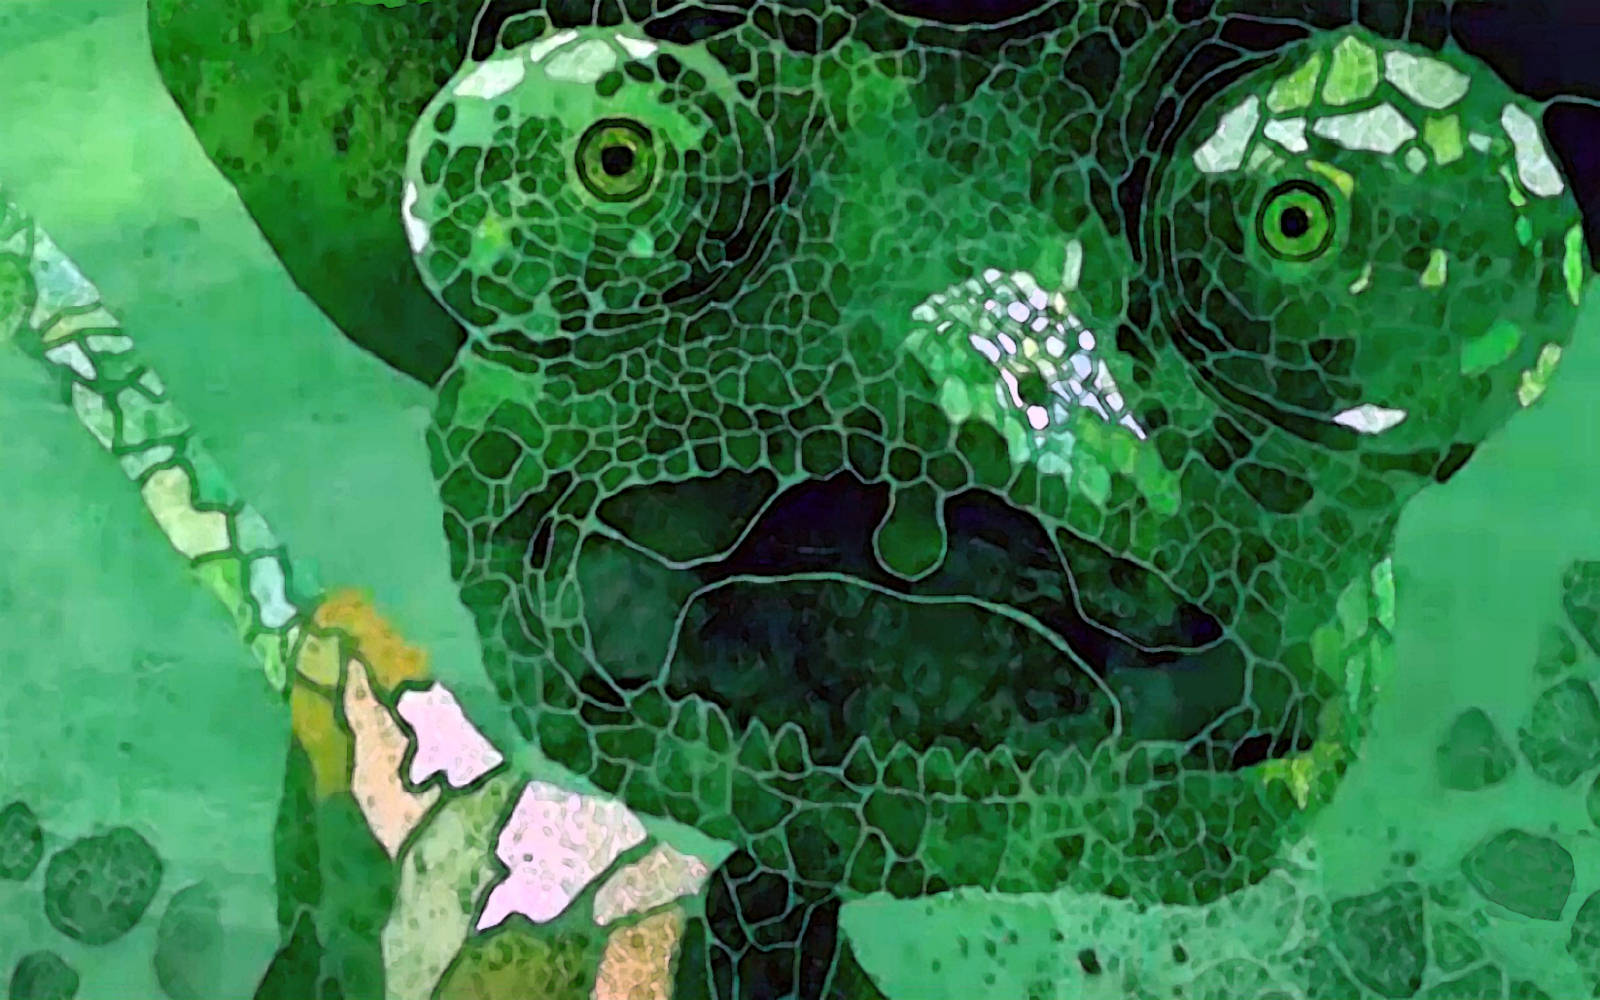 Caption: A portrait shot of Rango, the animated chameleon hero Wallpaper